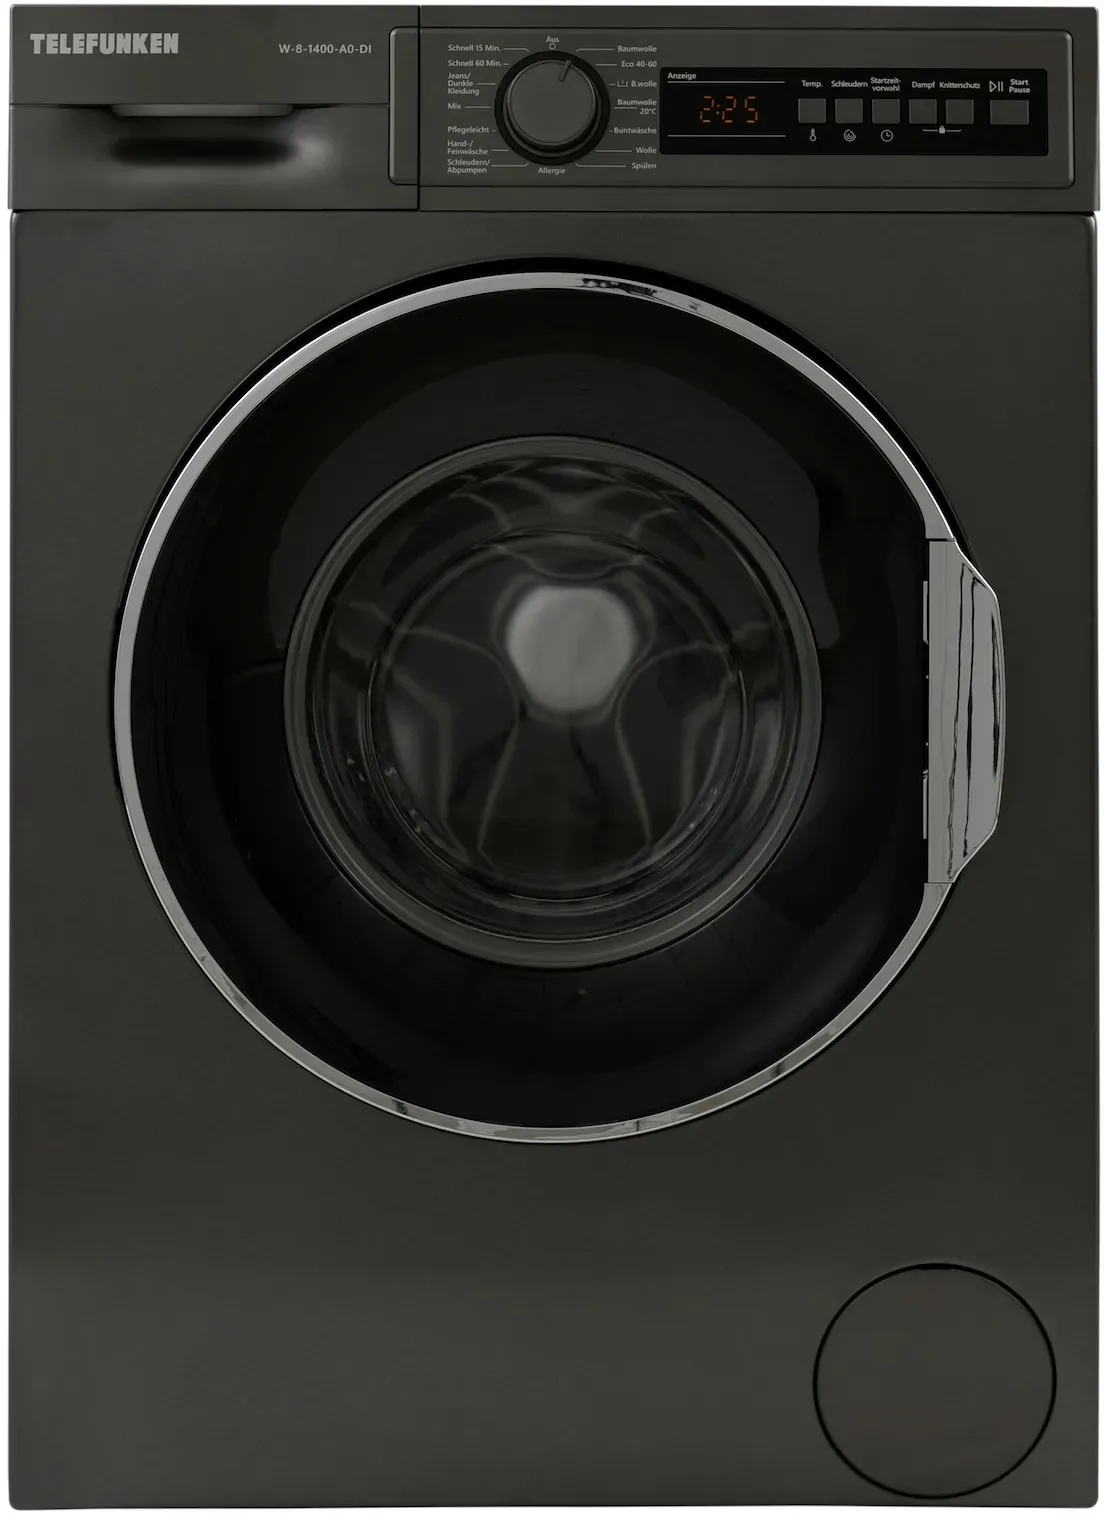 Telefunken Waschmaschine W-8-1400-A0-DI  8 kg   1400 U/Min   Energieklasse A   Dampffunktion   AquaStop